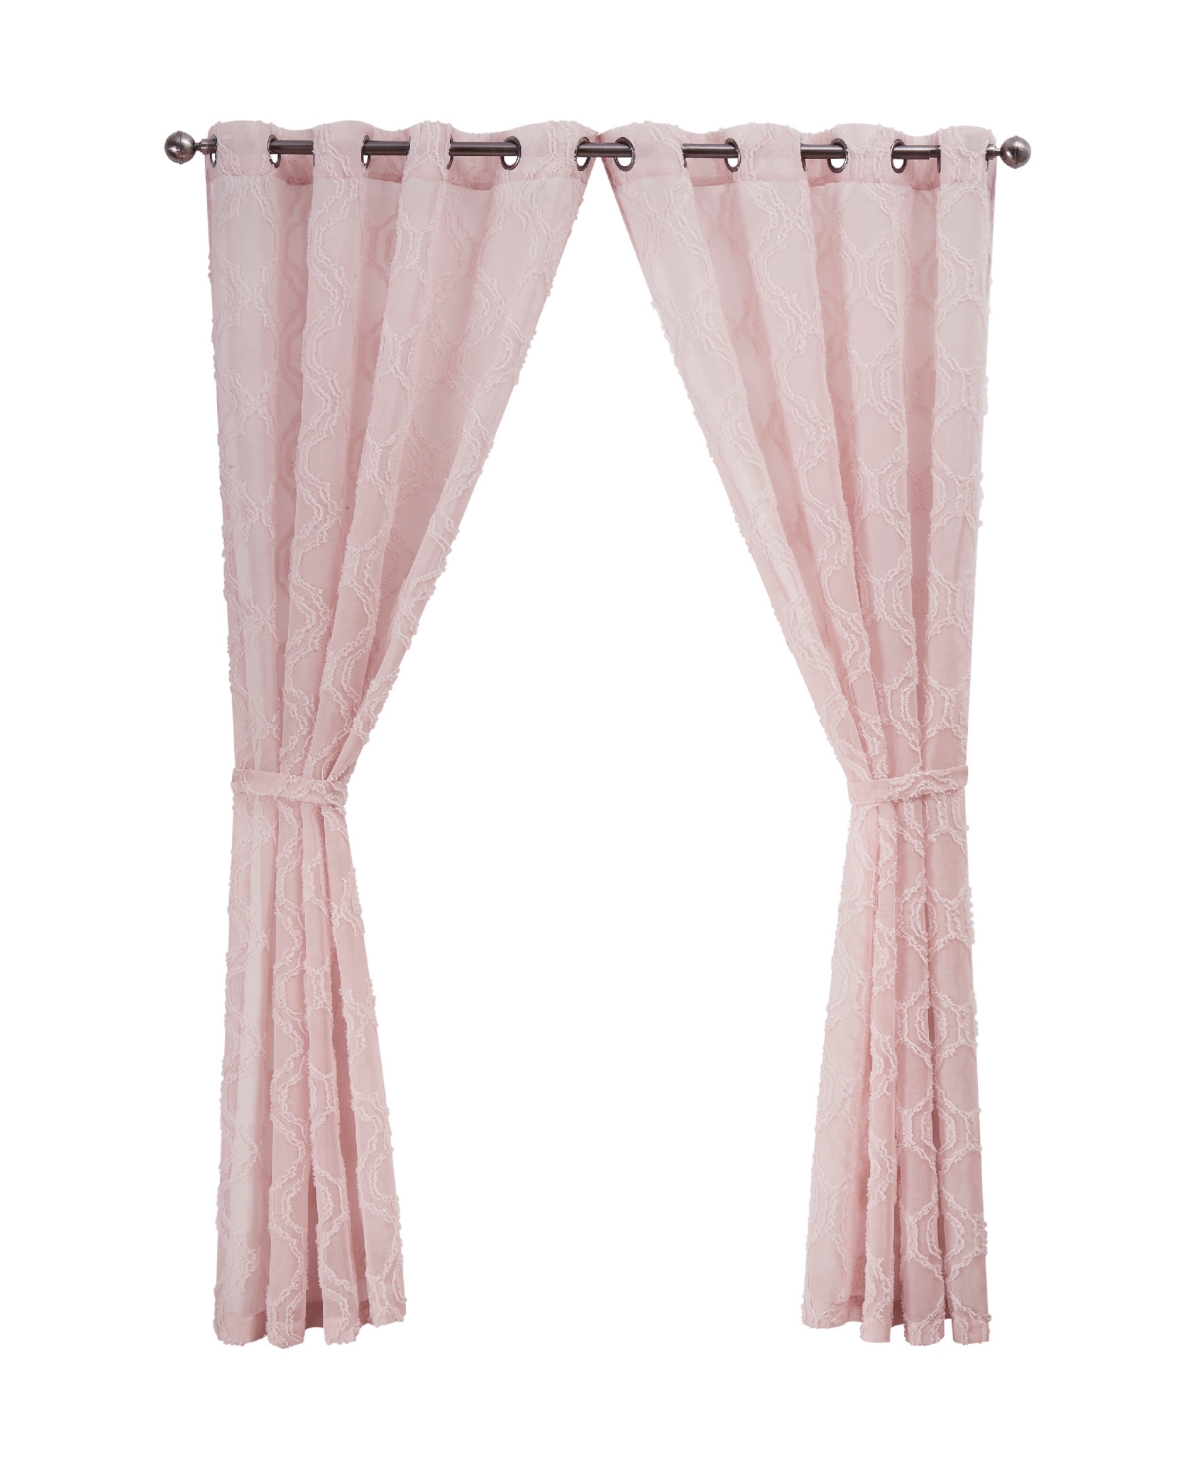 Jessica Simpson Everyn Sheer Embellished Grommet Window Curtain Panel Pair With Tiebacks, 52" X 84" In Blush Pink